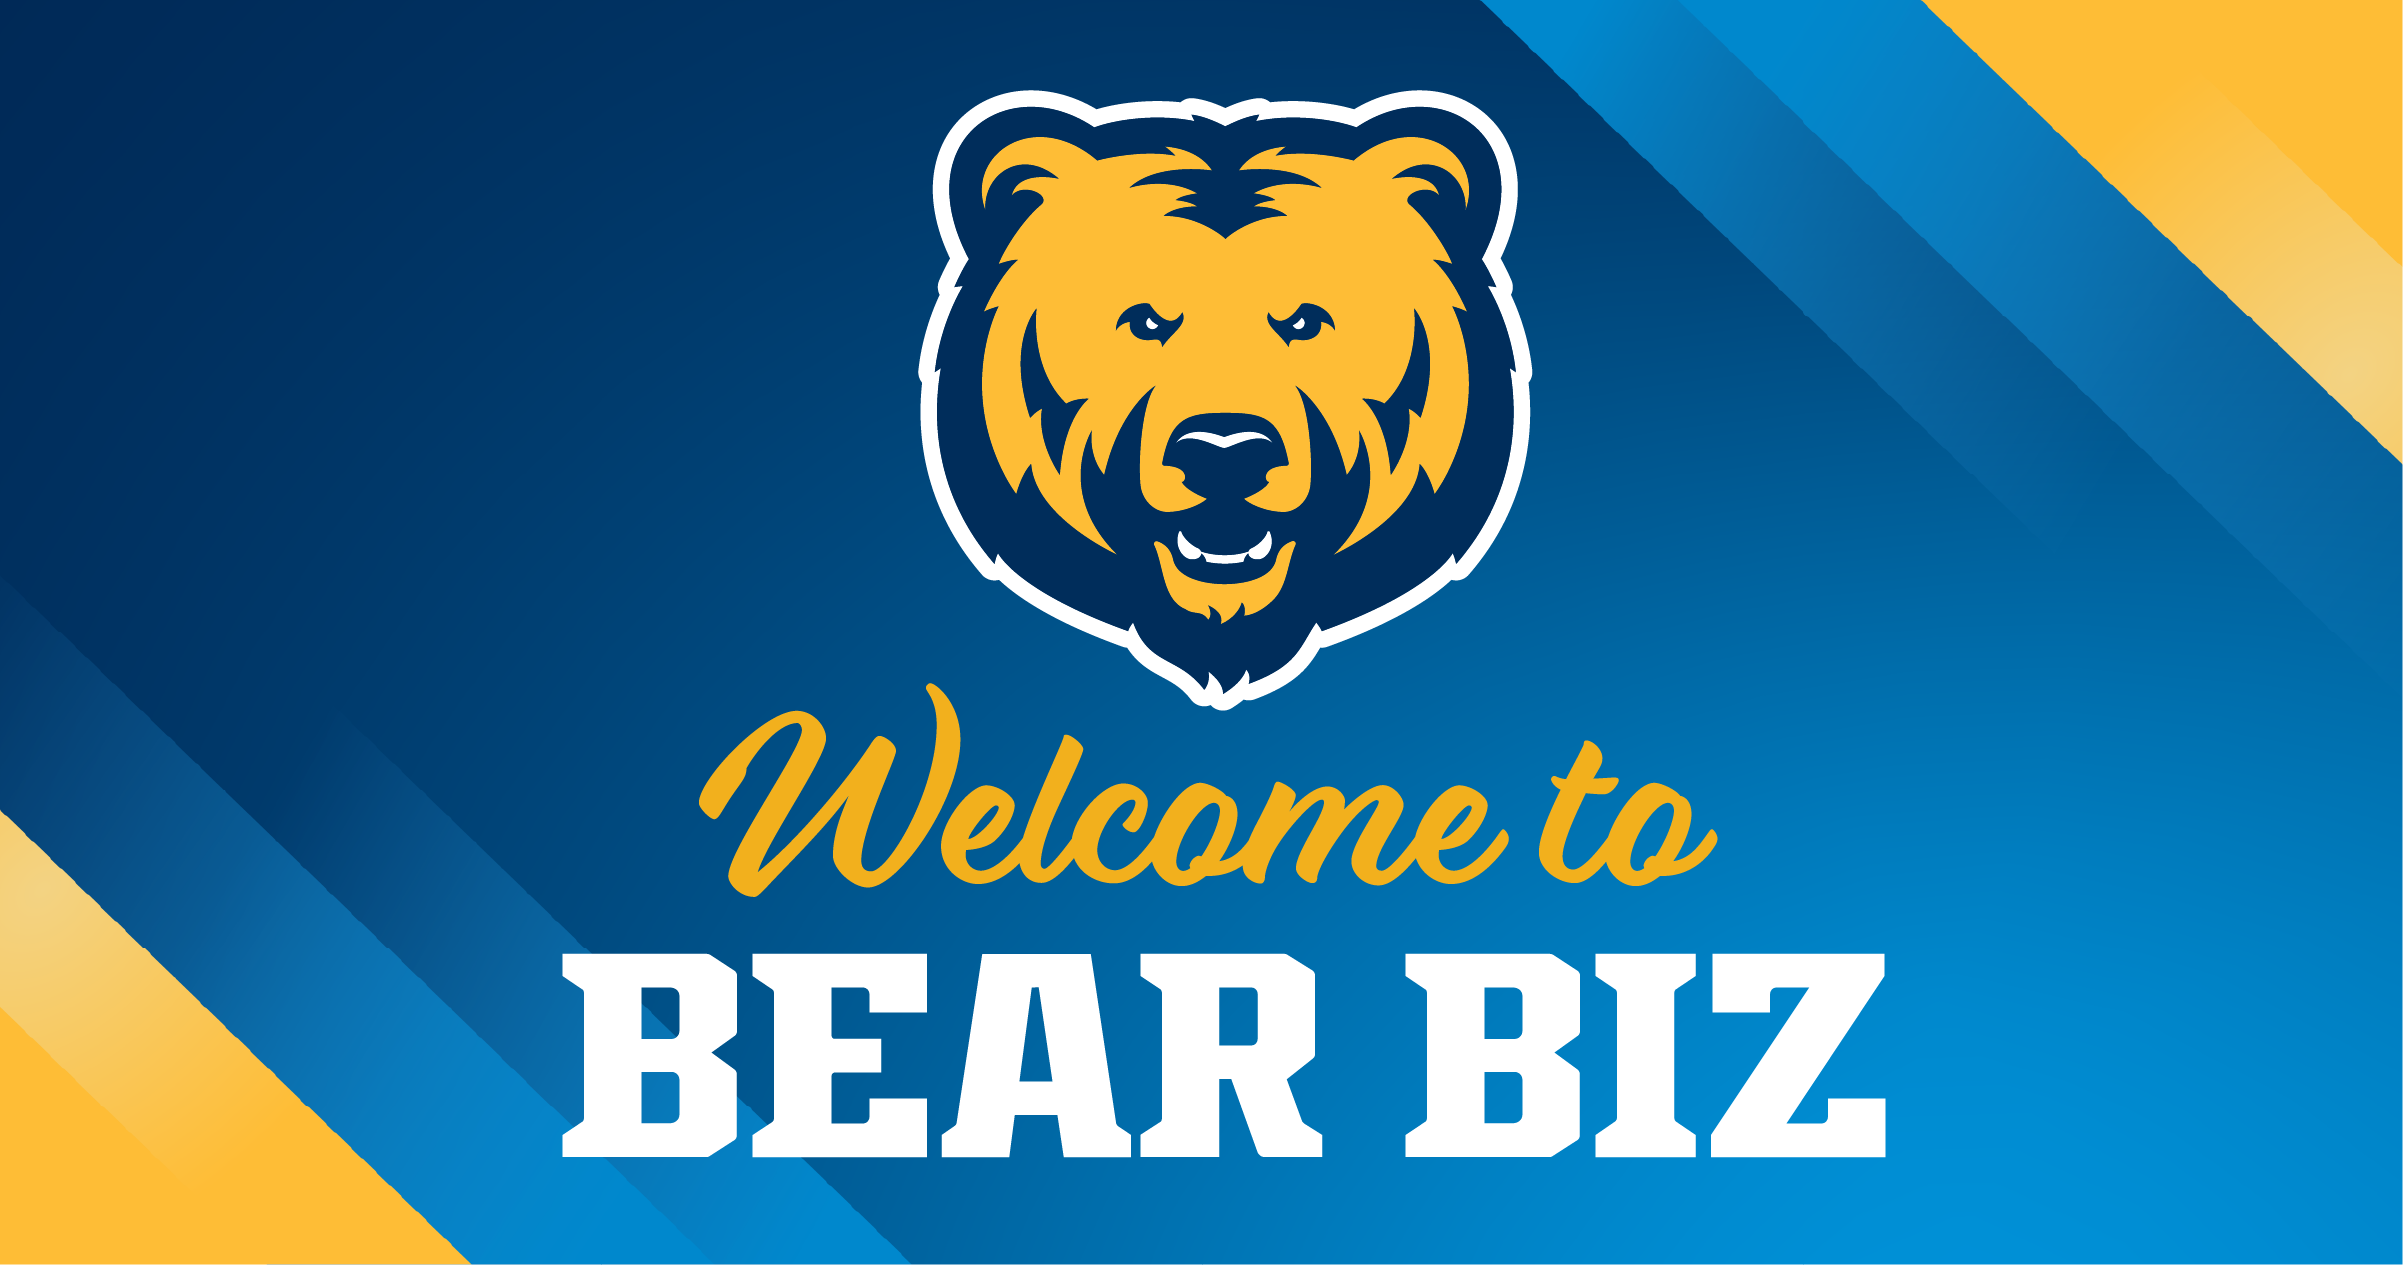 Welcome to Bear Biz